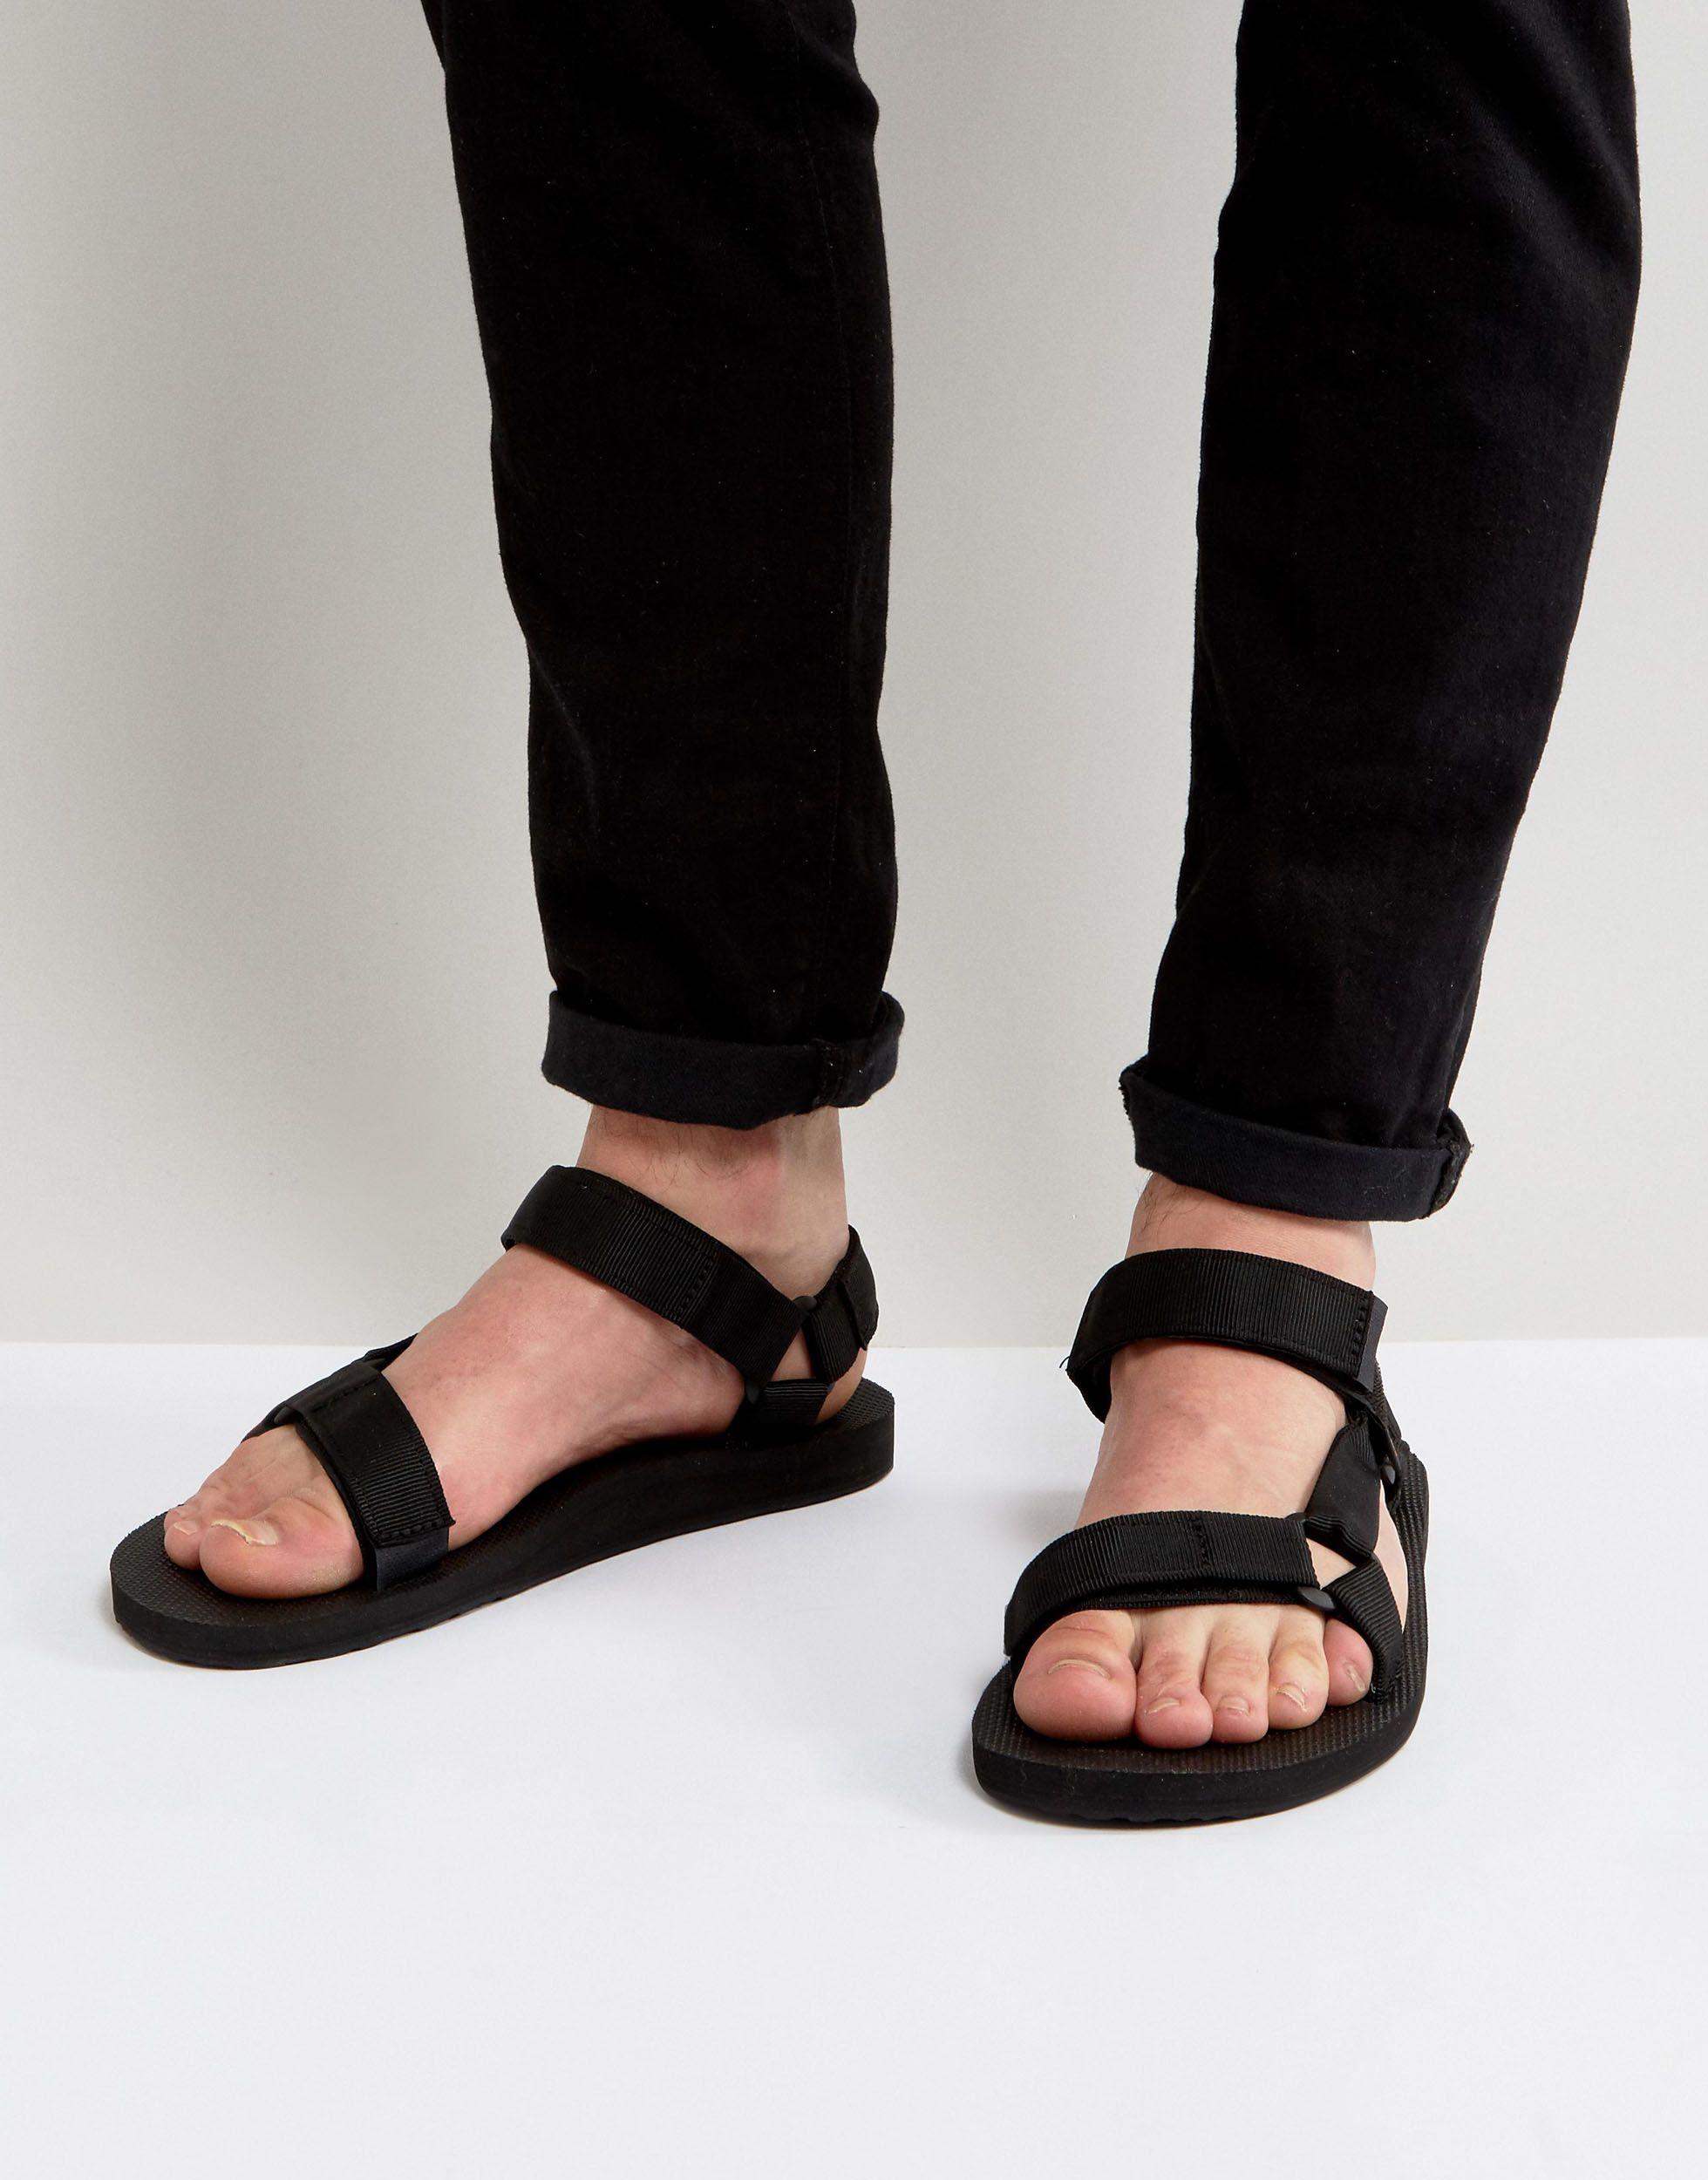 Teva Original Universal Urban Tech Sandals in Black for Men - Lyst